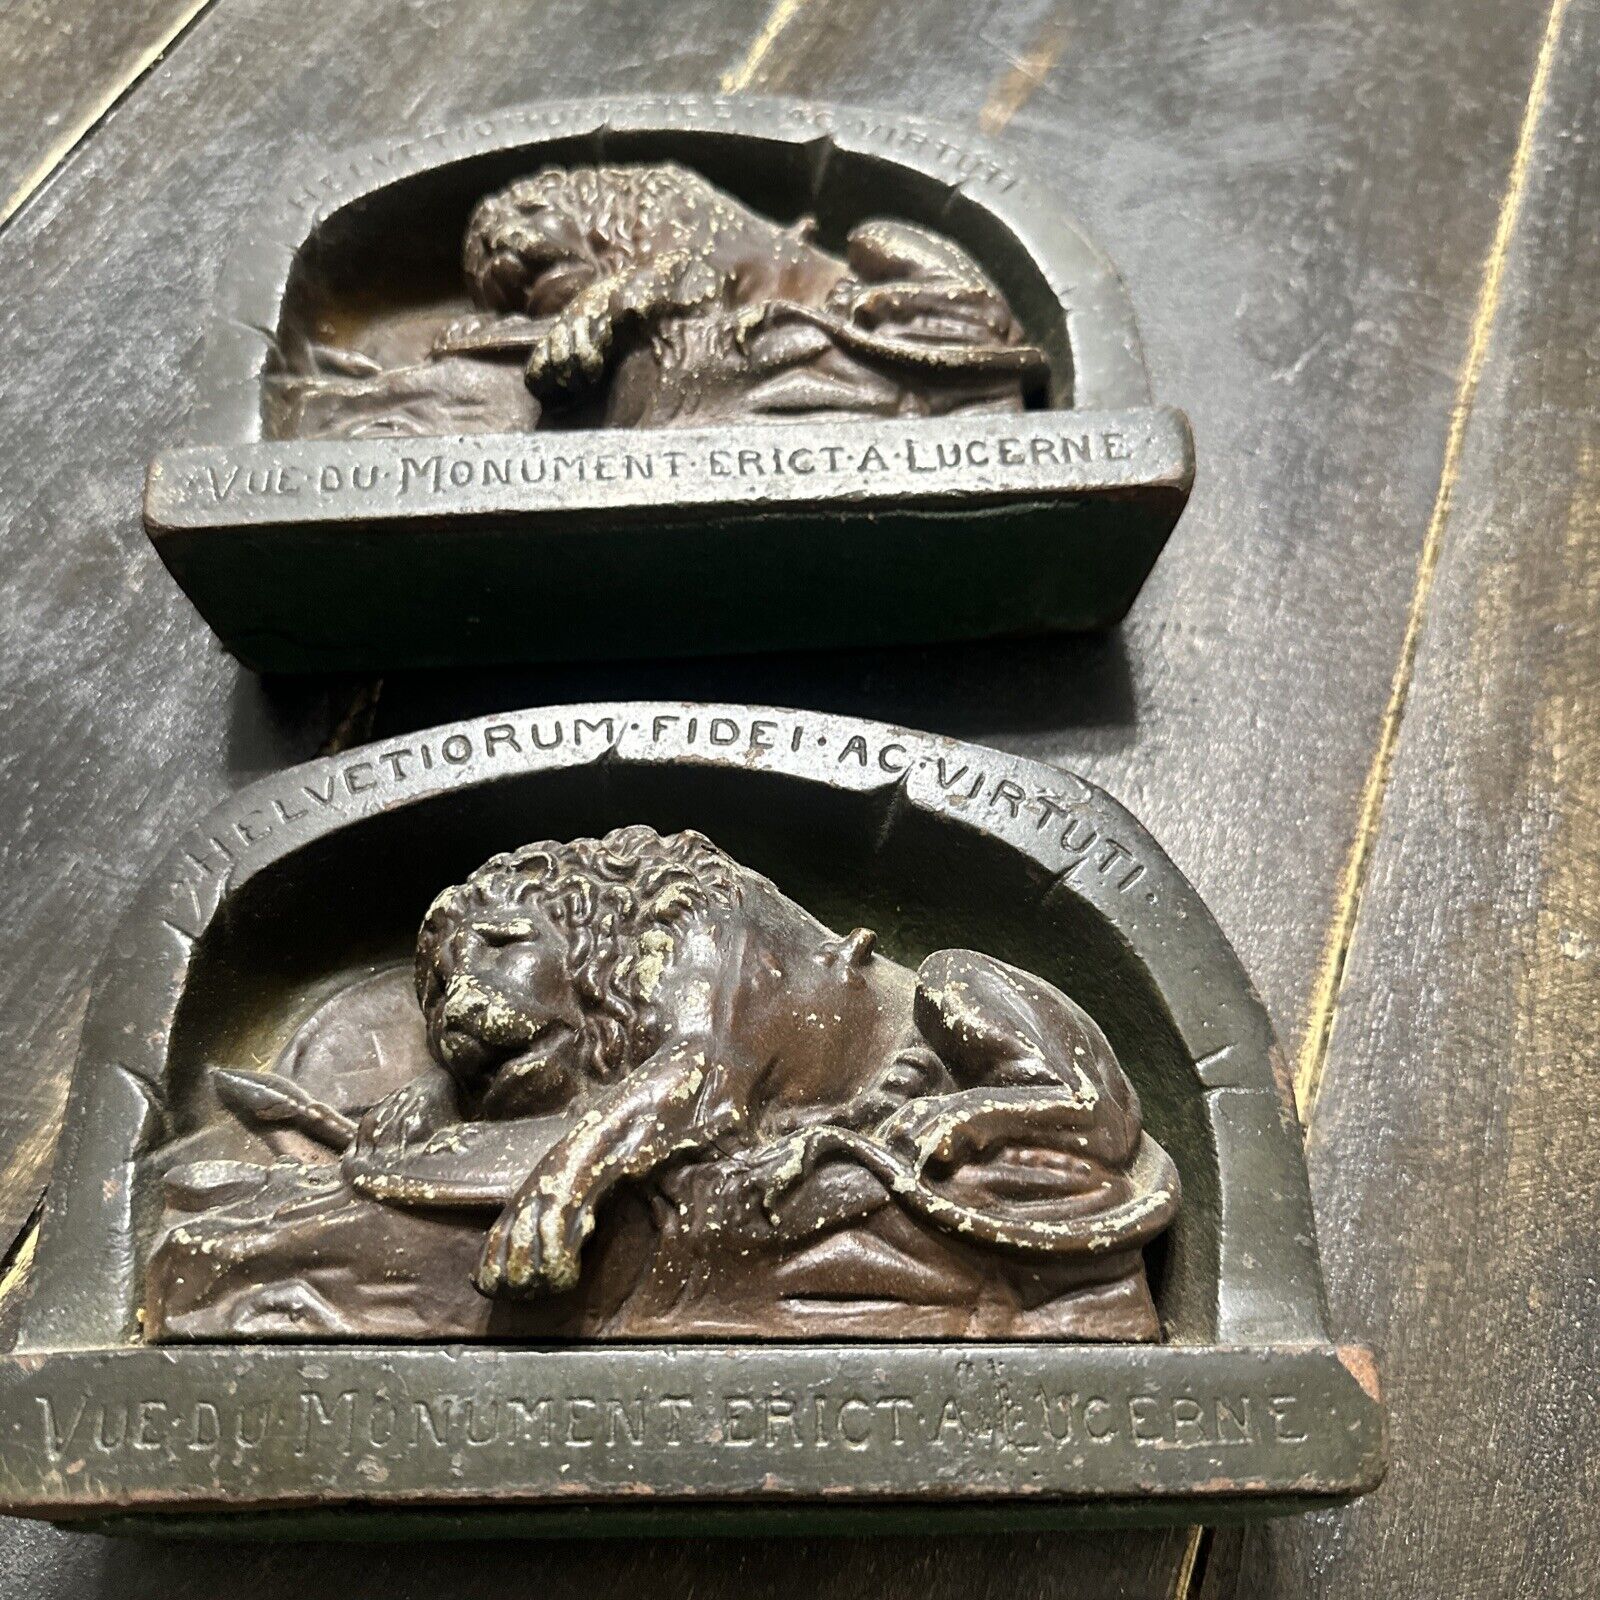 Vtg Bookend Lion Monument Lucerne Swiss HELVETIORUM FIDEI AC VIRTUTI Set Cast